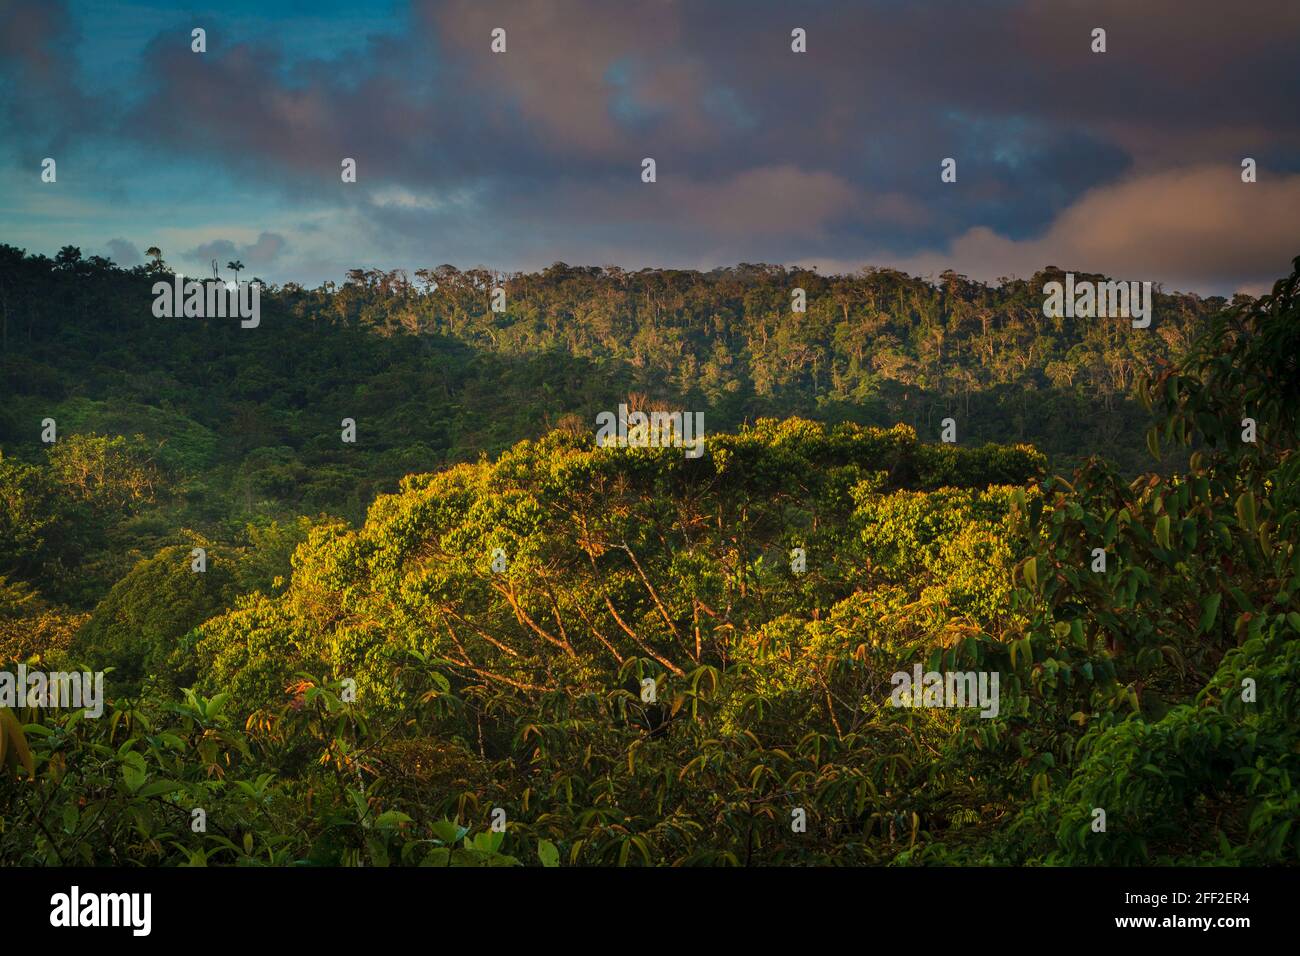 Panamalandschaft mit Regenwald in der frühen Morgensonne in Garduk in der Wildnis Narganas, Comarca Guna Yala, Republik Panama. Stockfoto